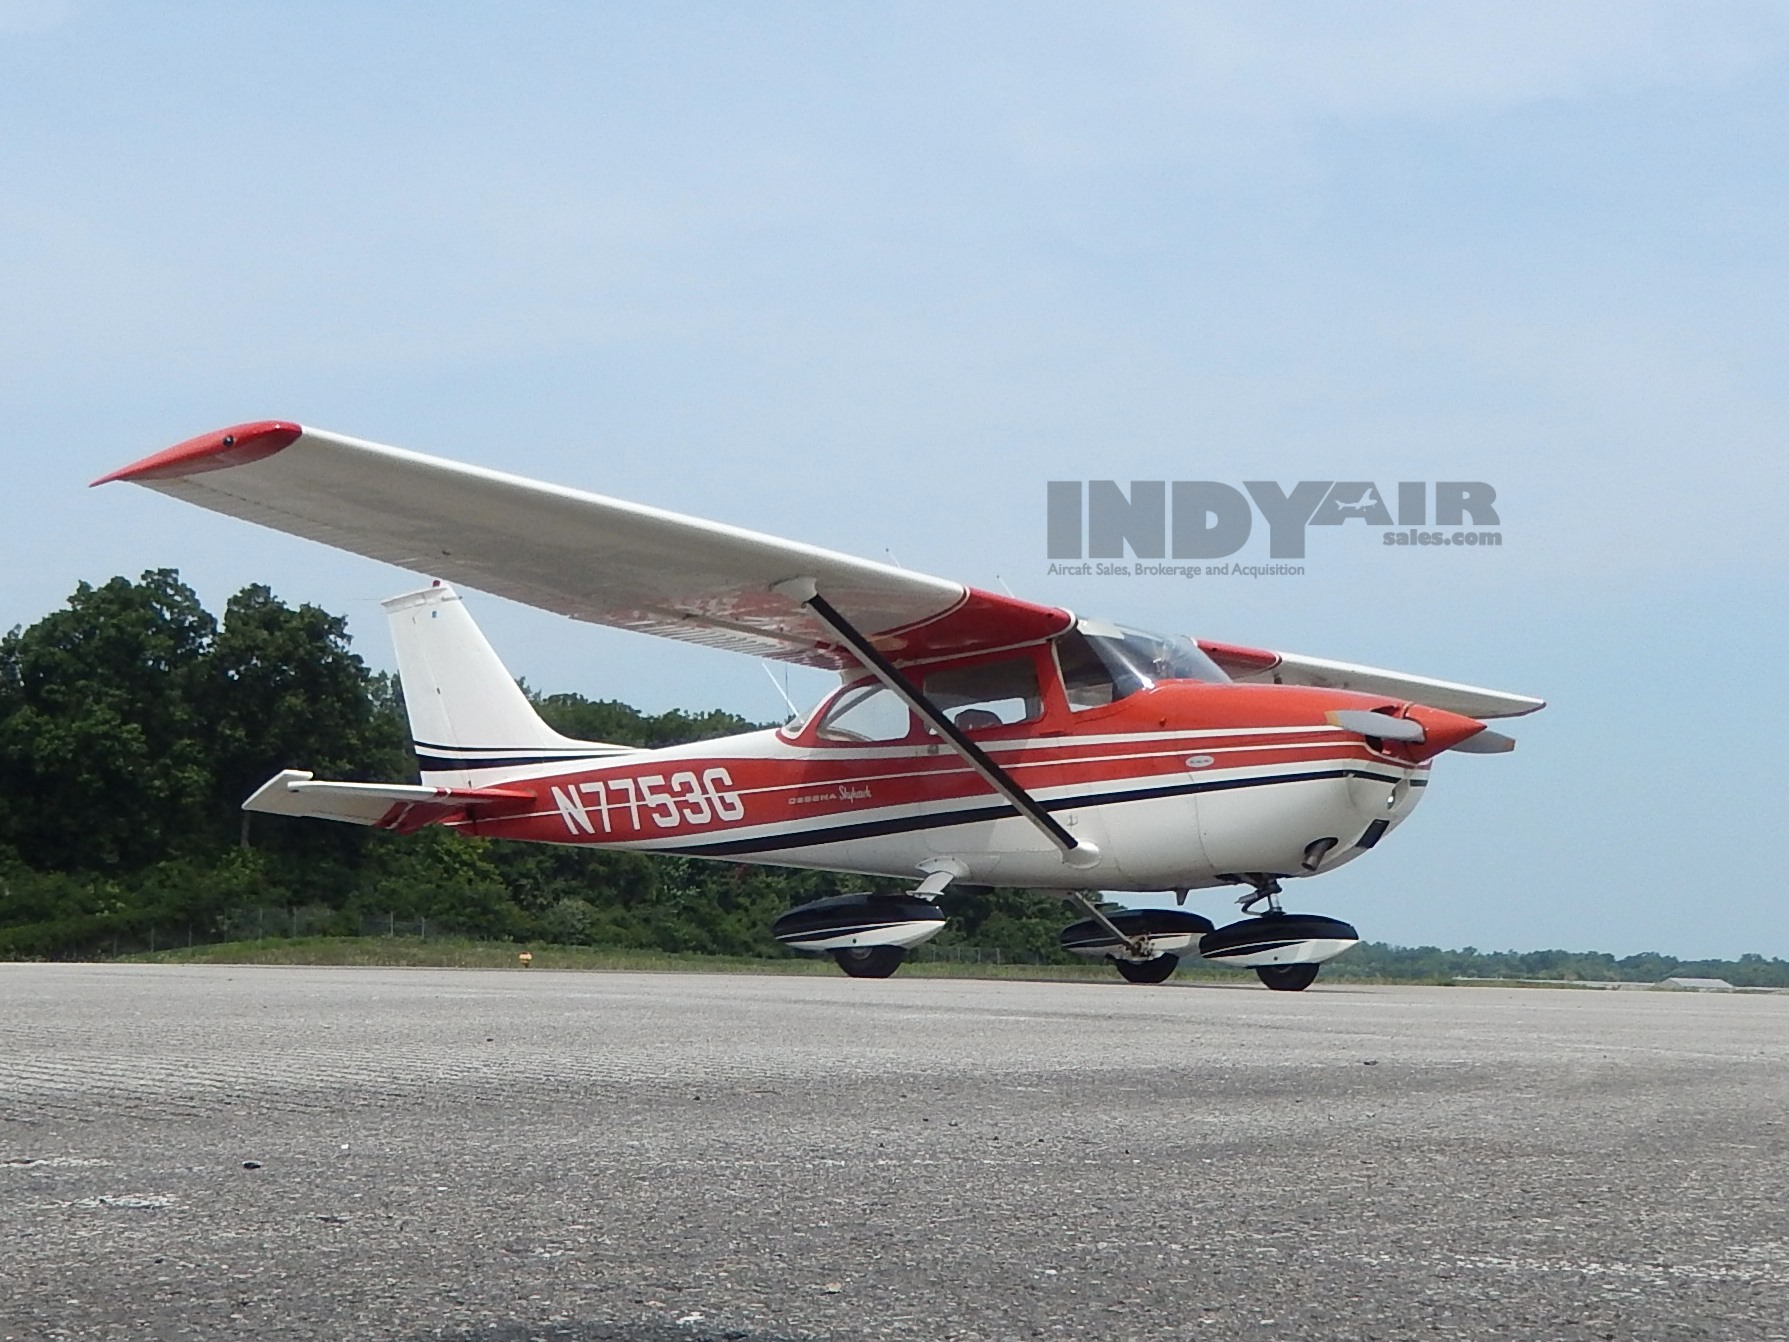 1971 Cessna 172 - N7753G